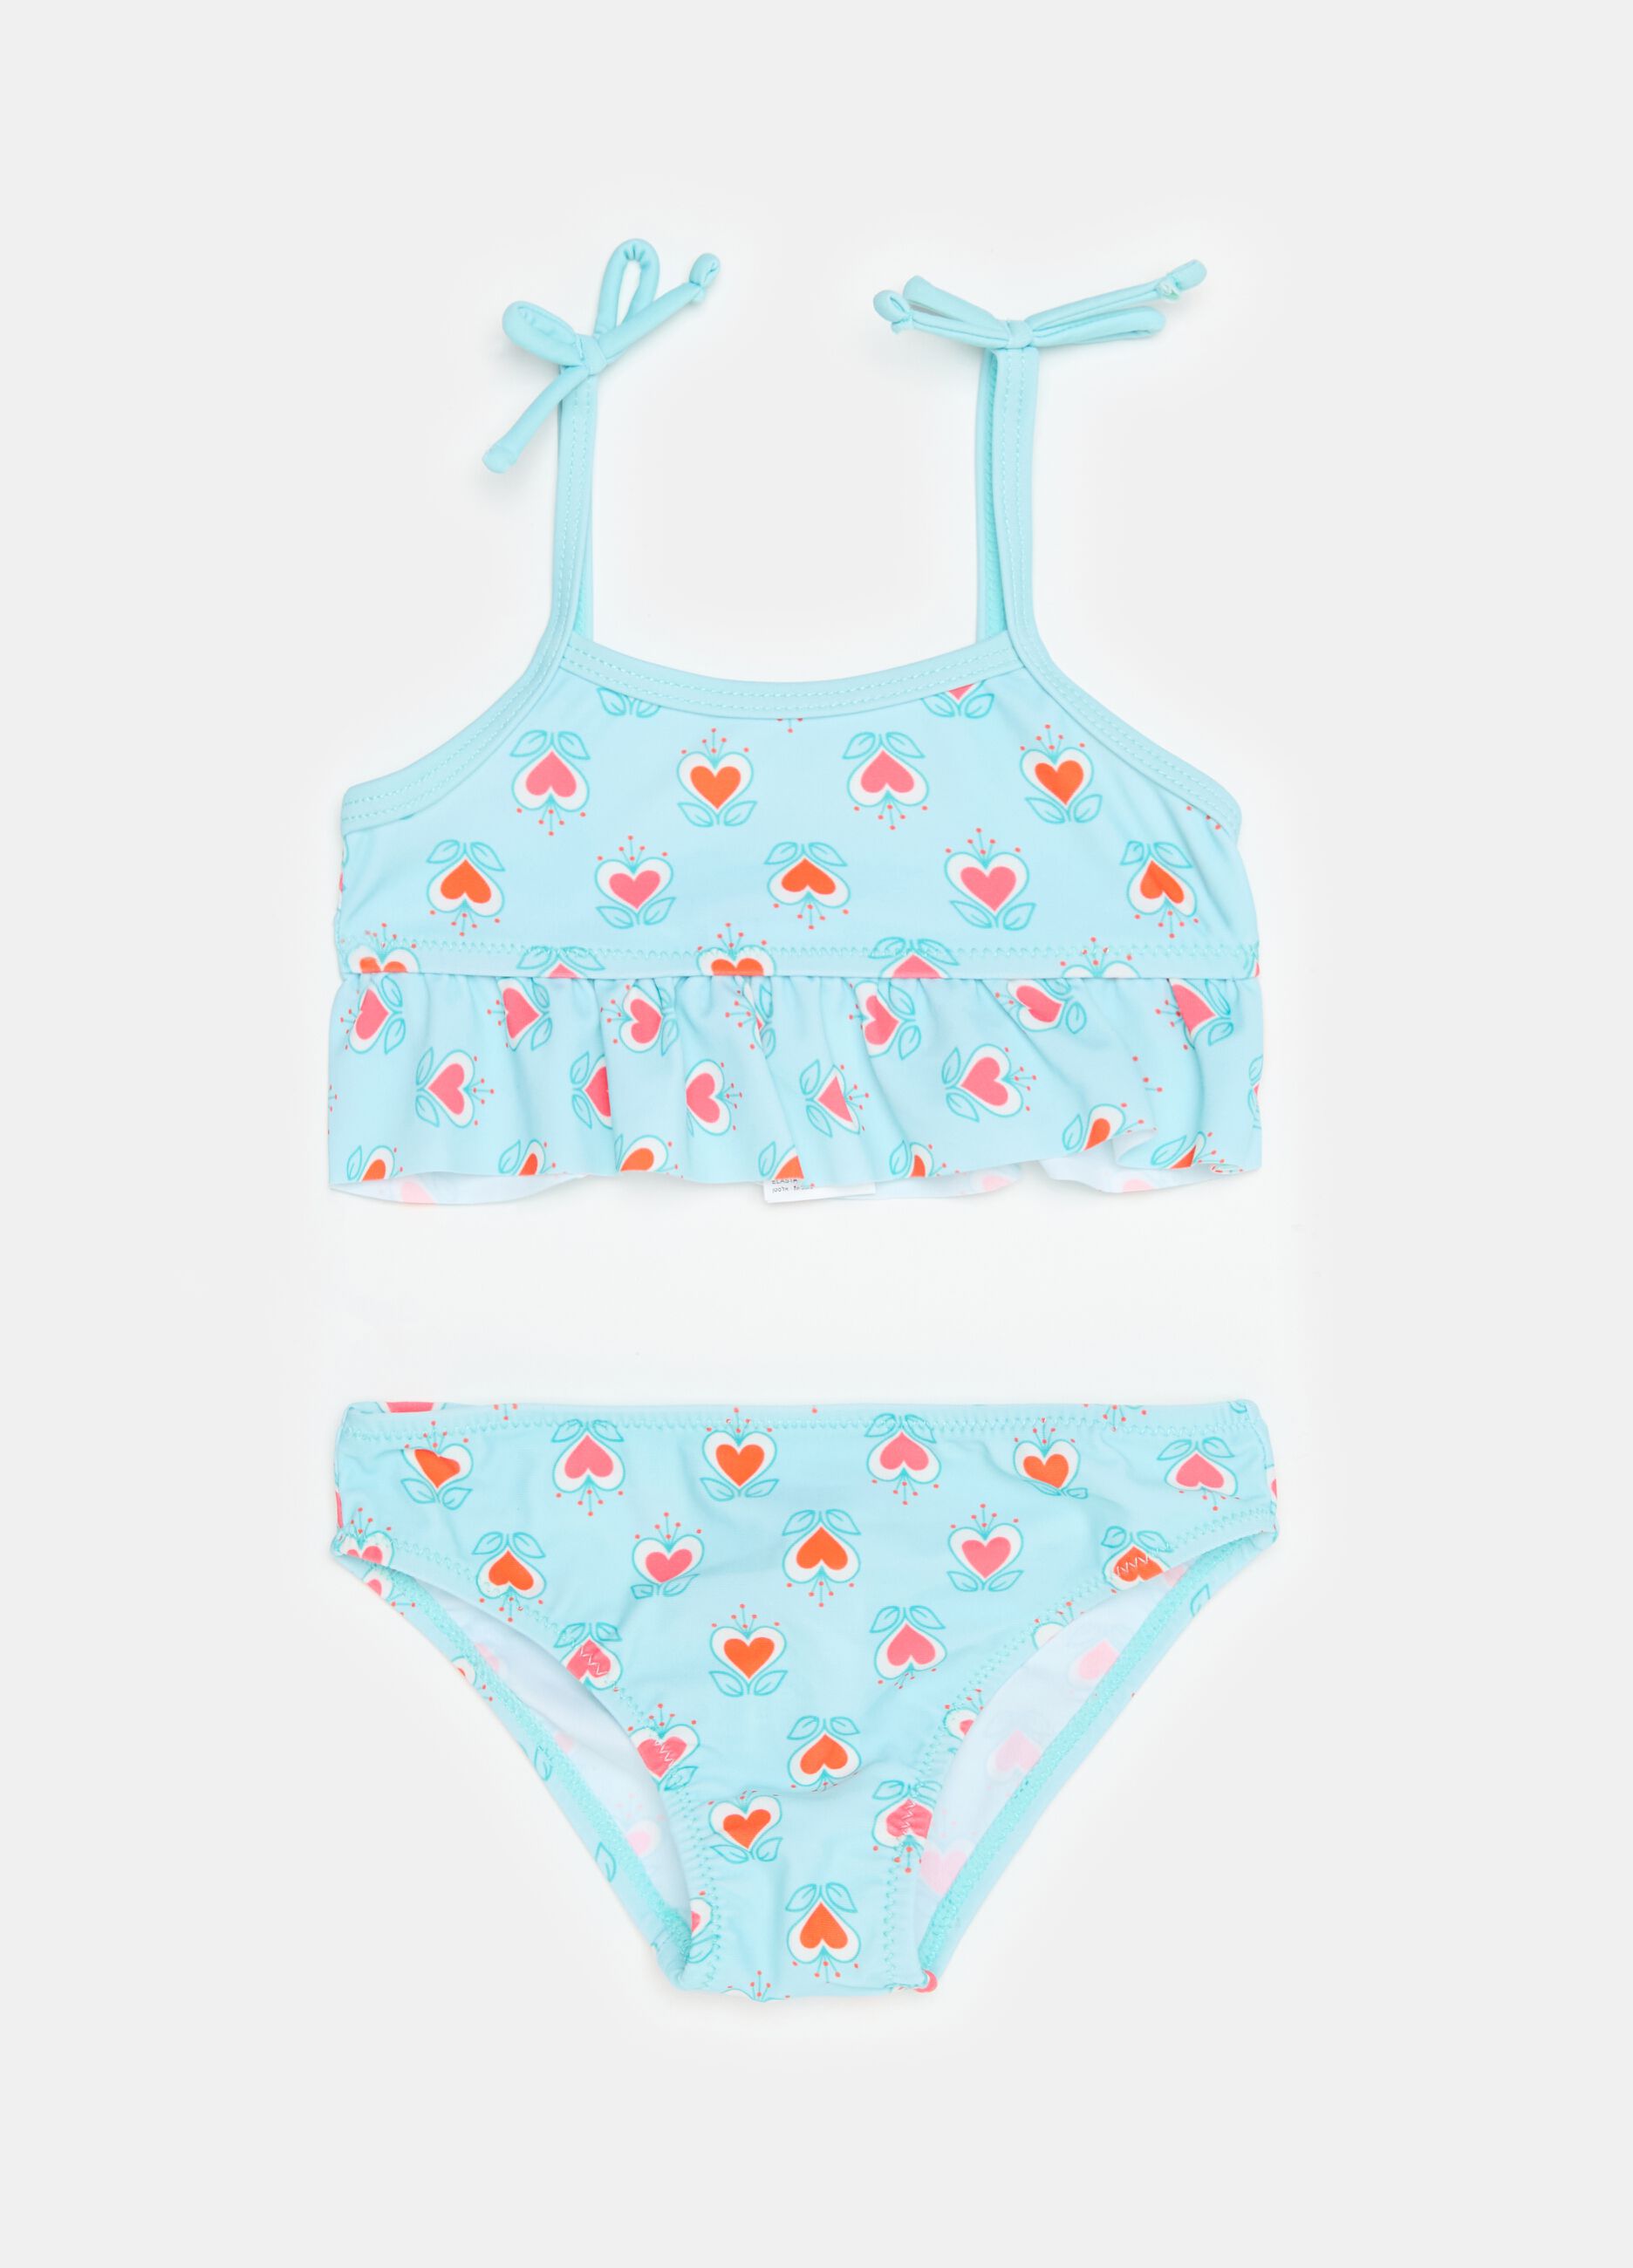 Bikini with floral hearts print